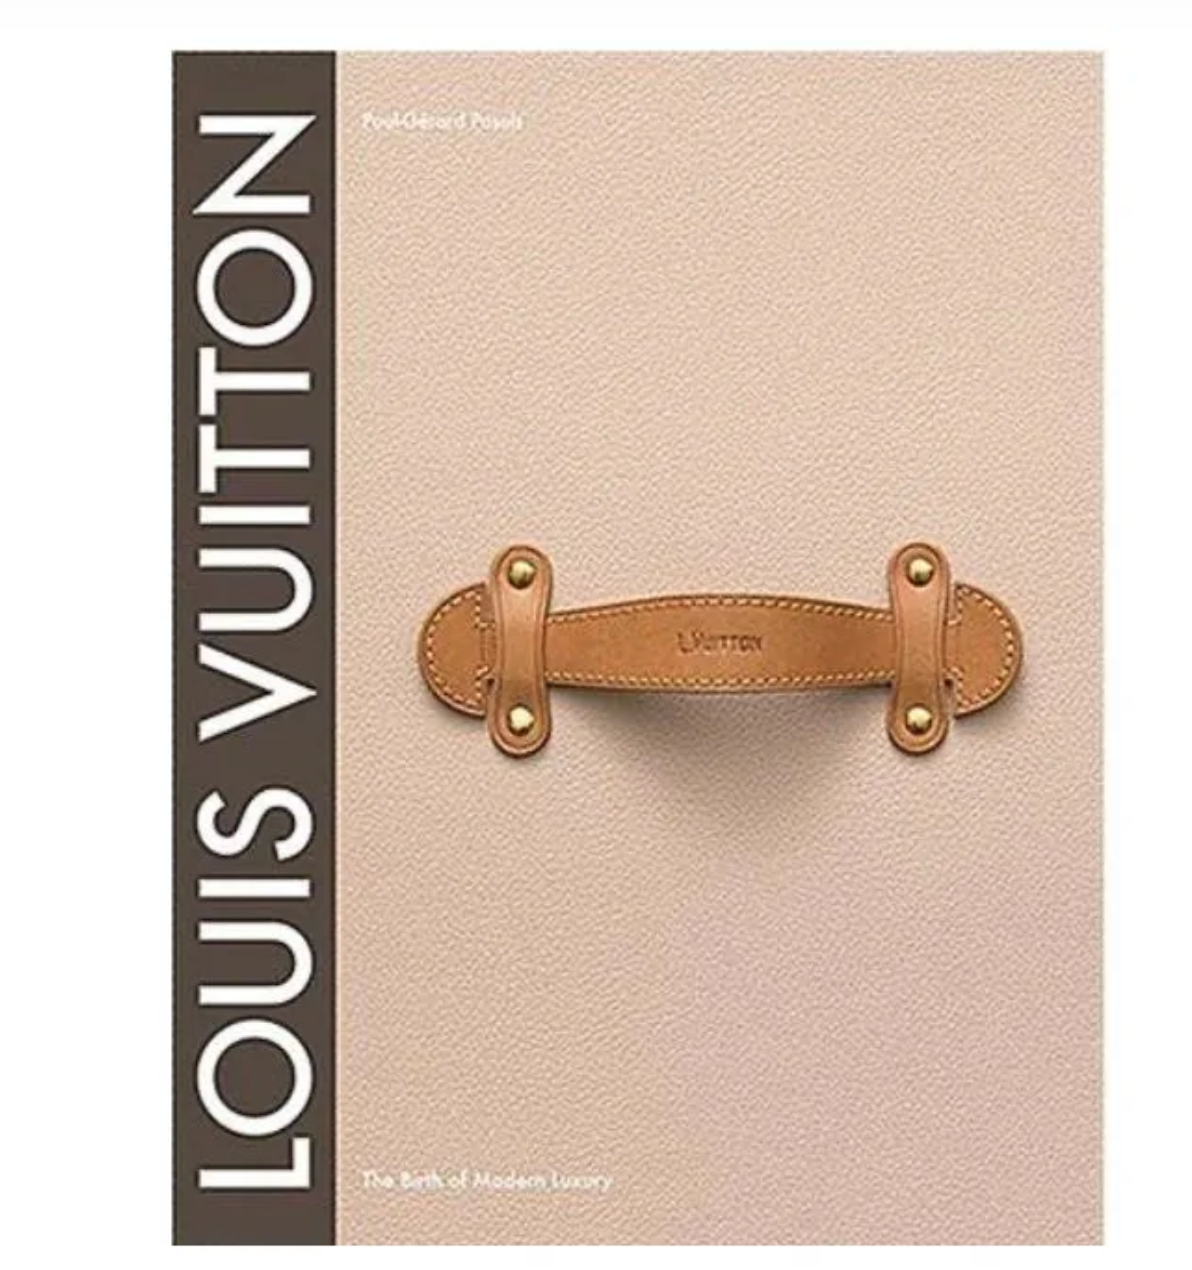 Louis Vuitton: The Birth of Modern Luxury Hardcover